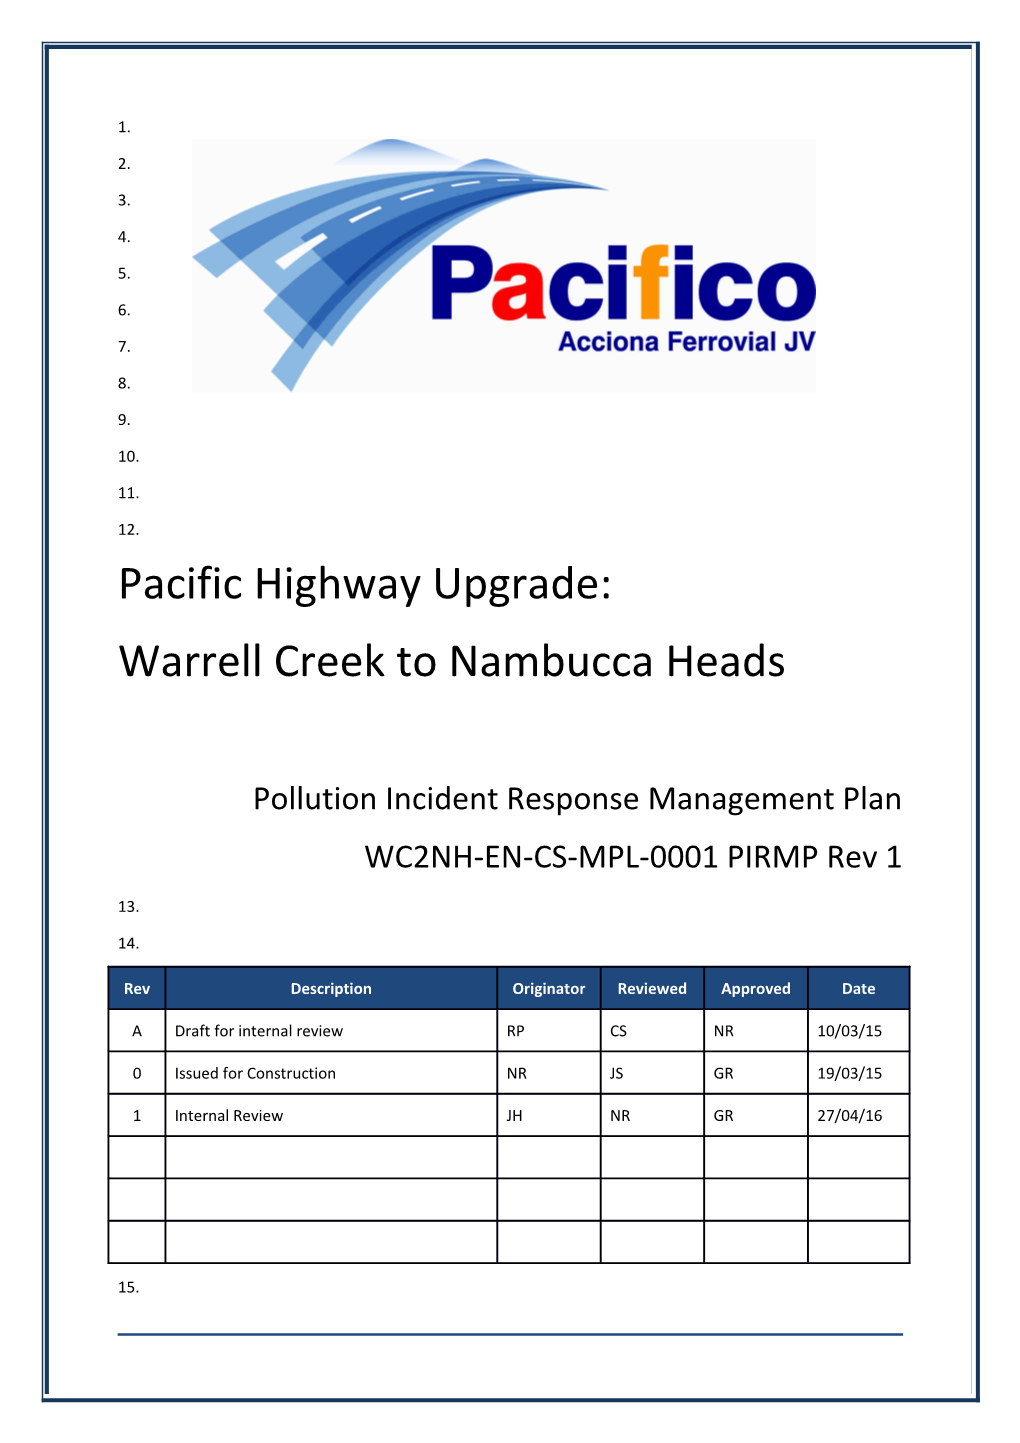 Pacific Highway Upgrade: Warrell Creek to Nambucca Heads